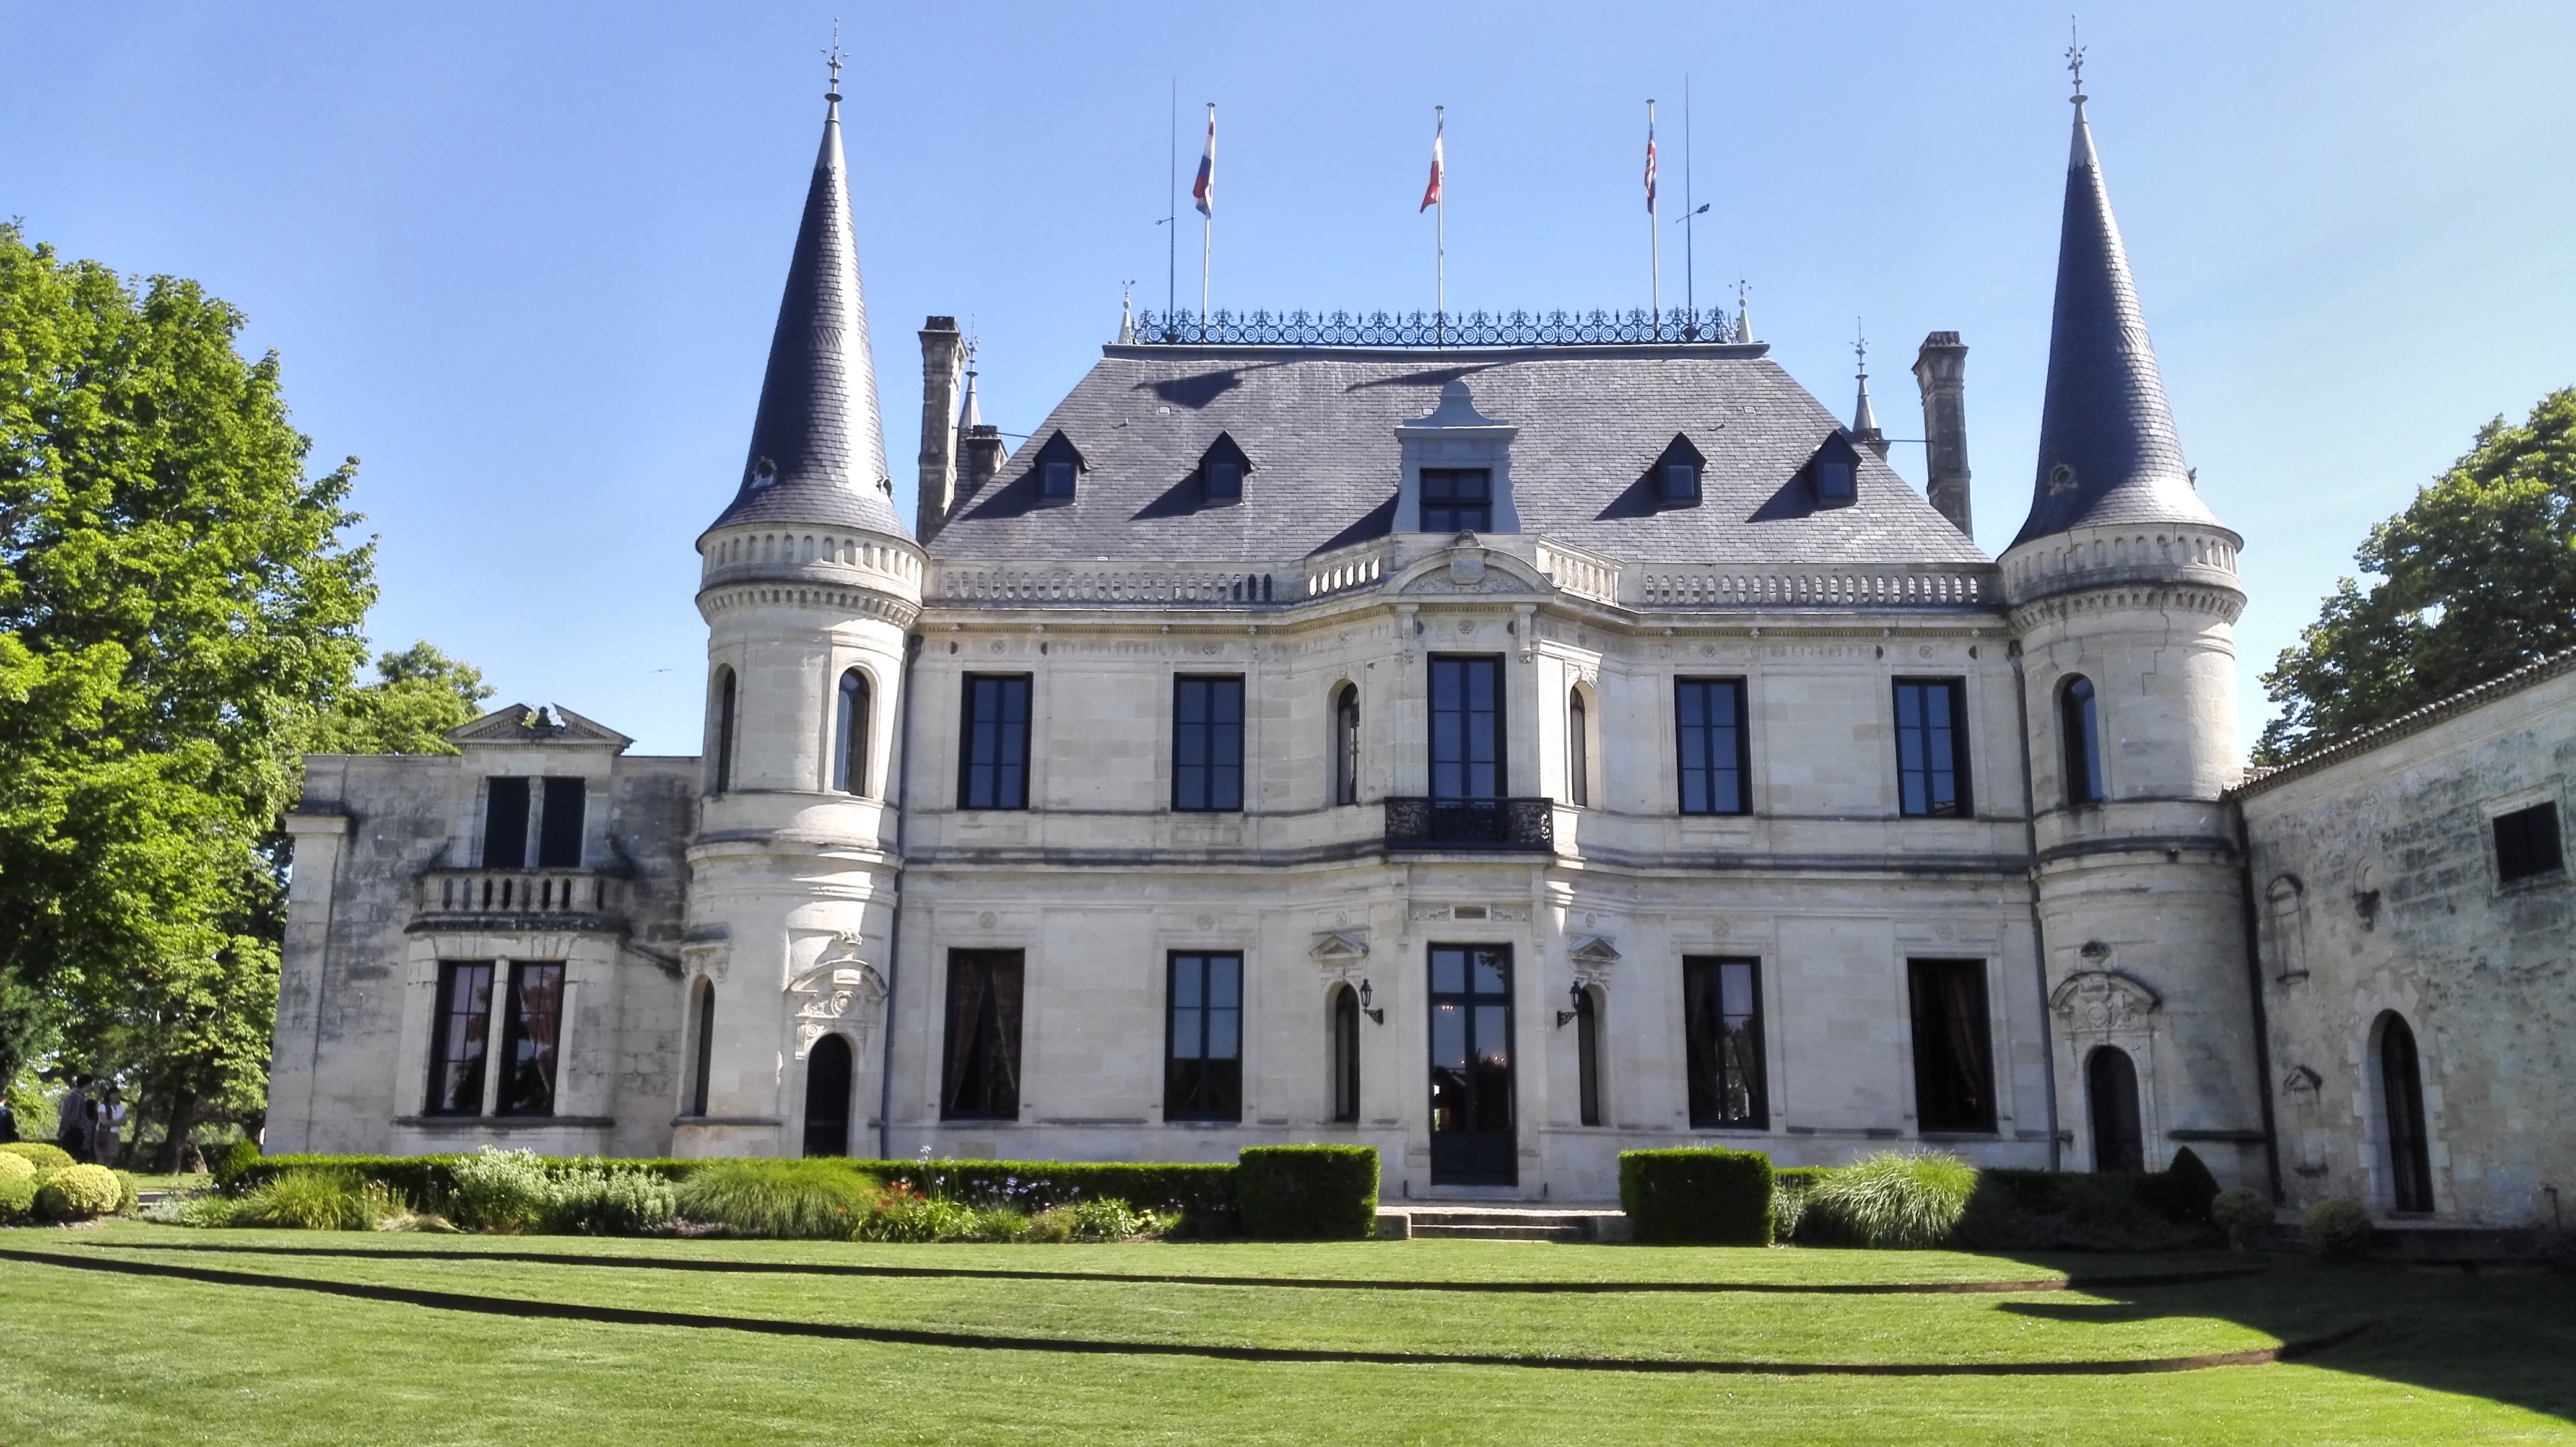 Château Palmer AOC Margaux Rouge 2012